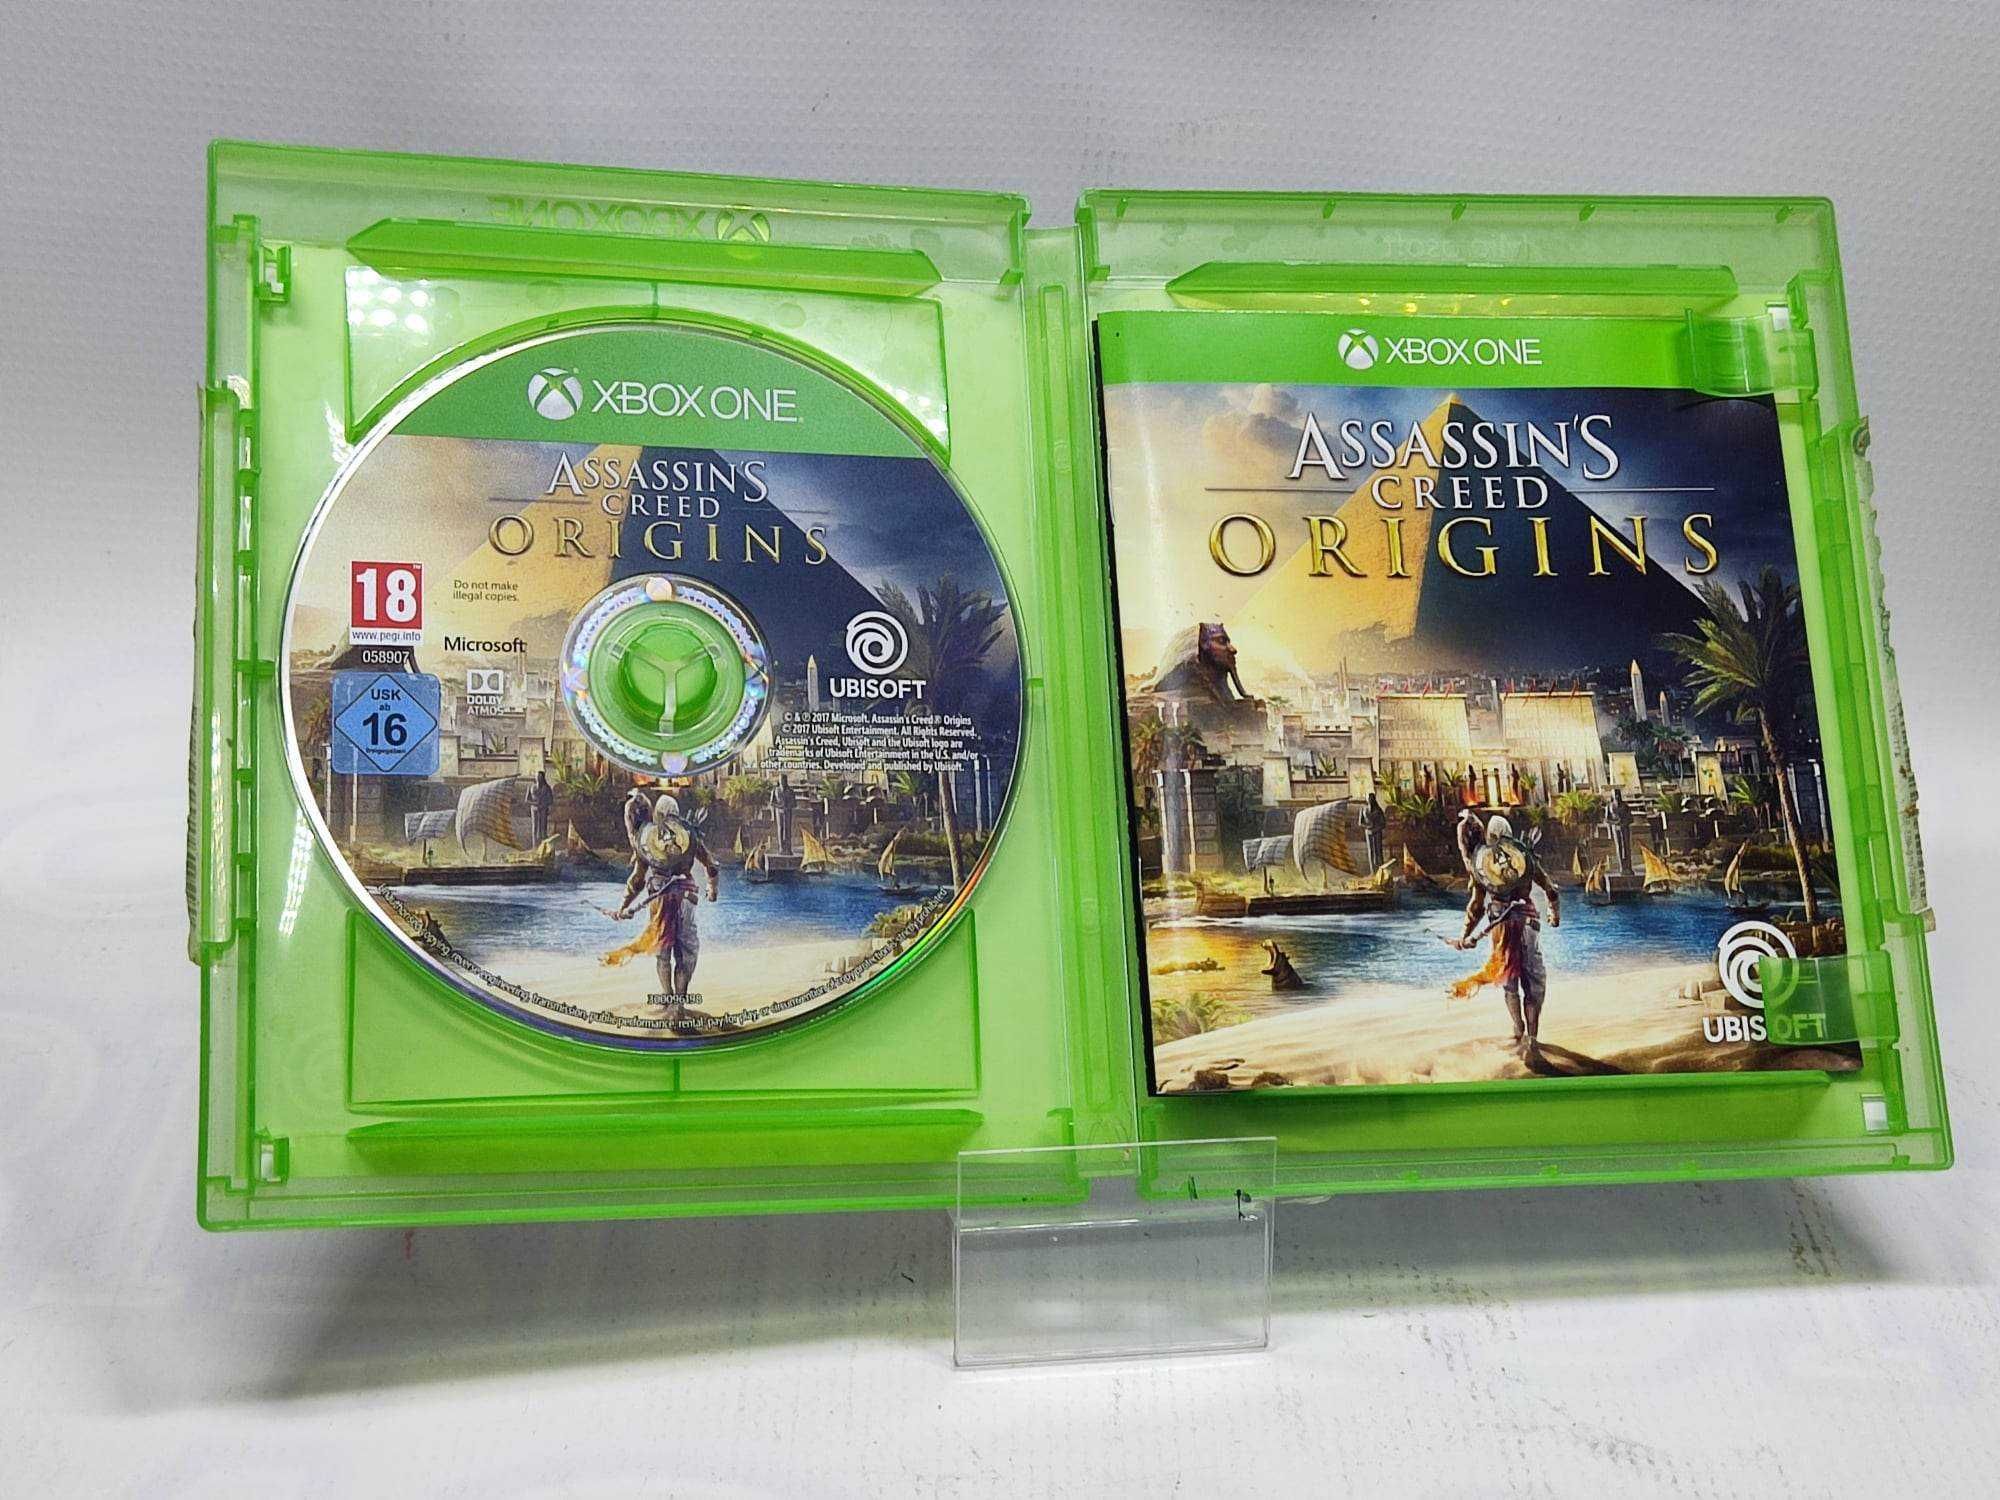 Gra XBOX ONE Assassin's Creed ORIGINS, Lombard Krosno Betleja